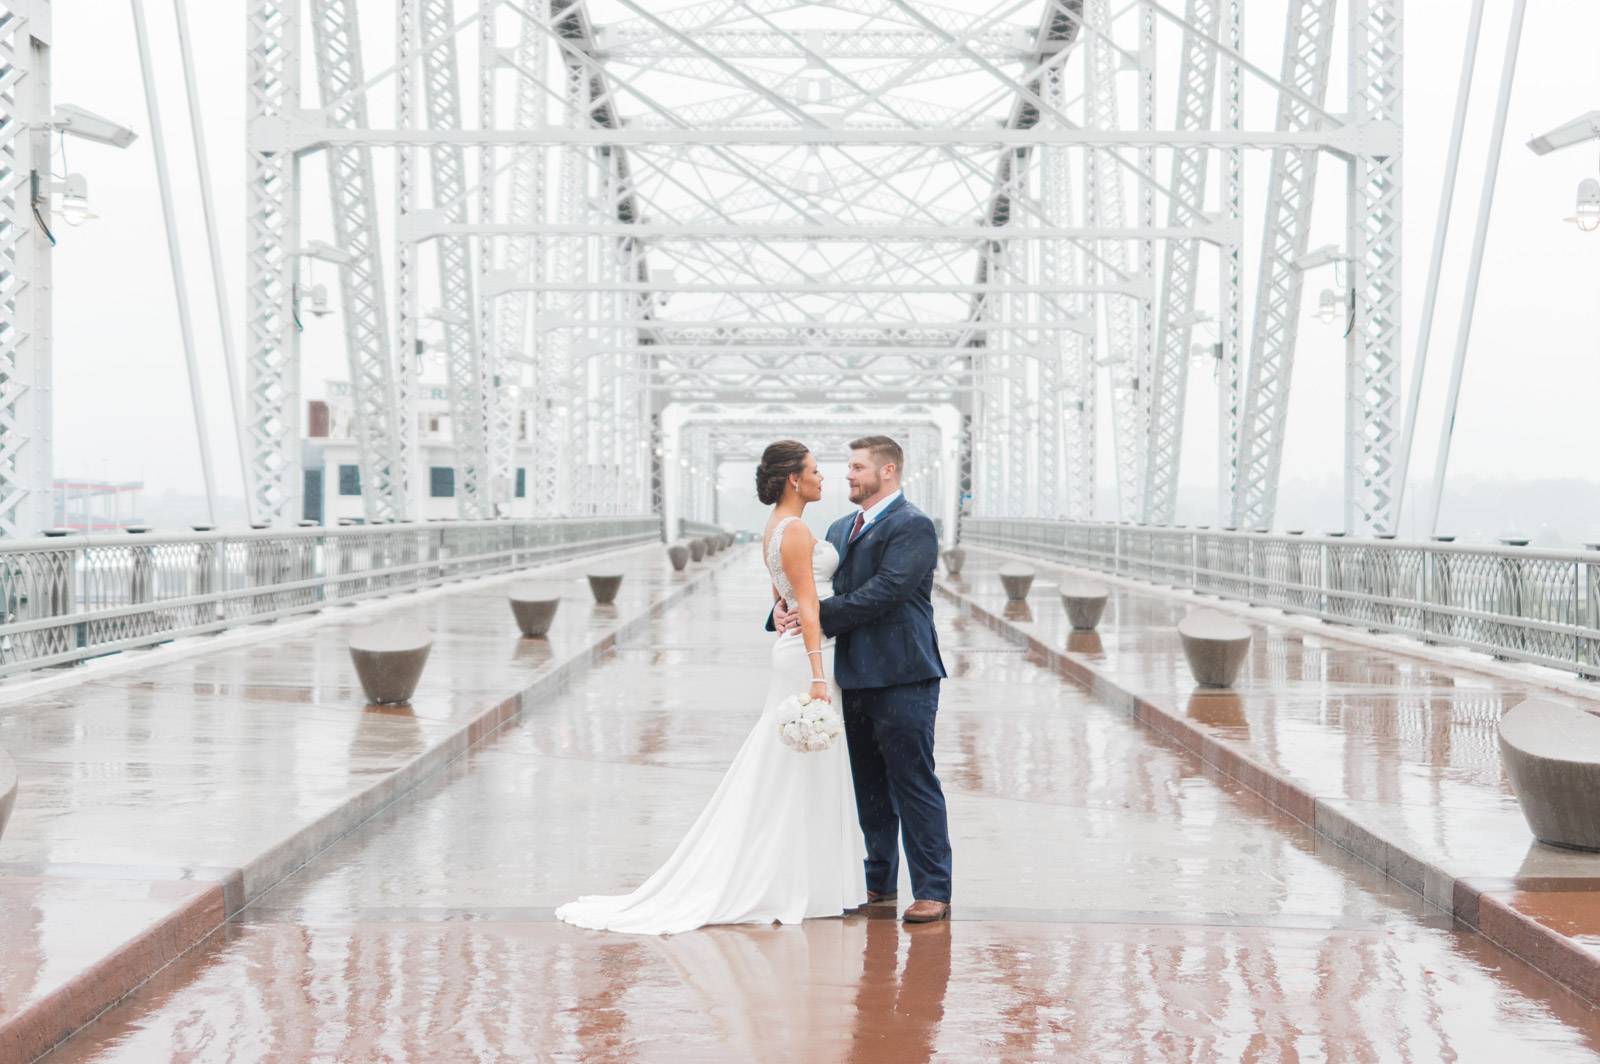 Alexa & Zack’s Rainy Nashville Elopement |  Nashville Real Wedding